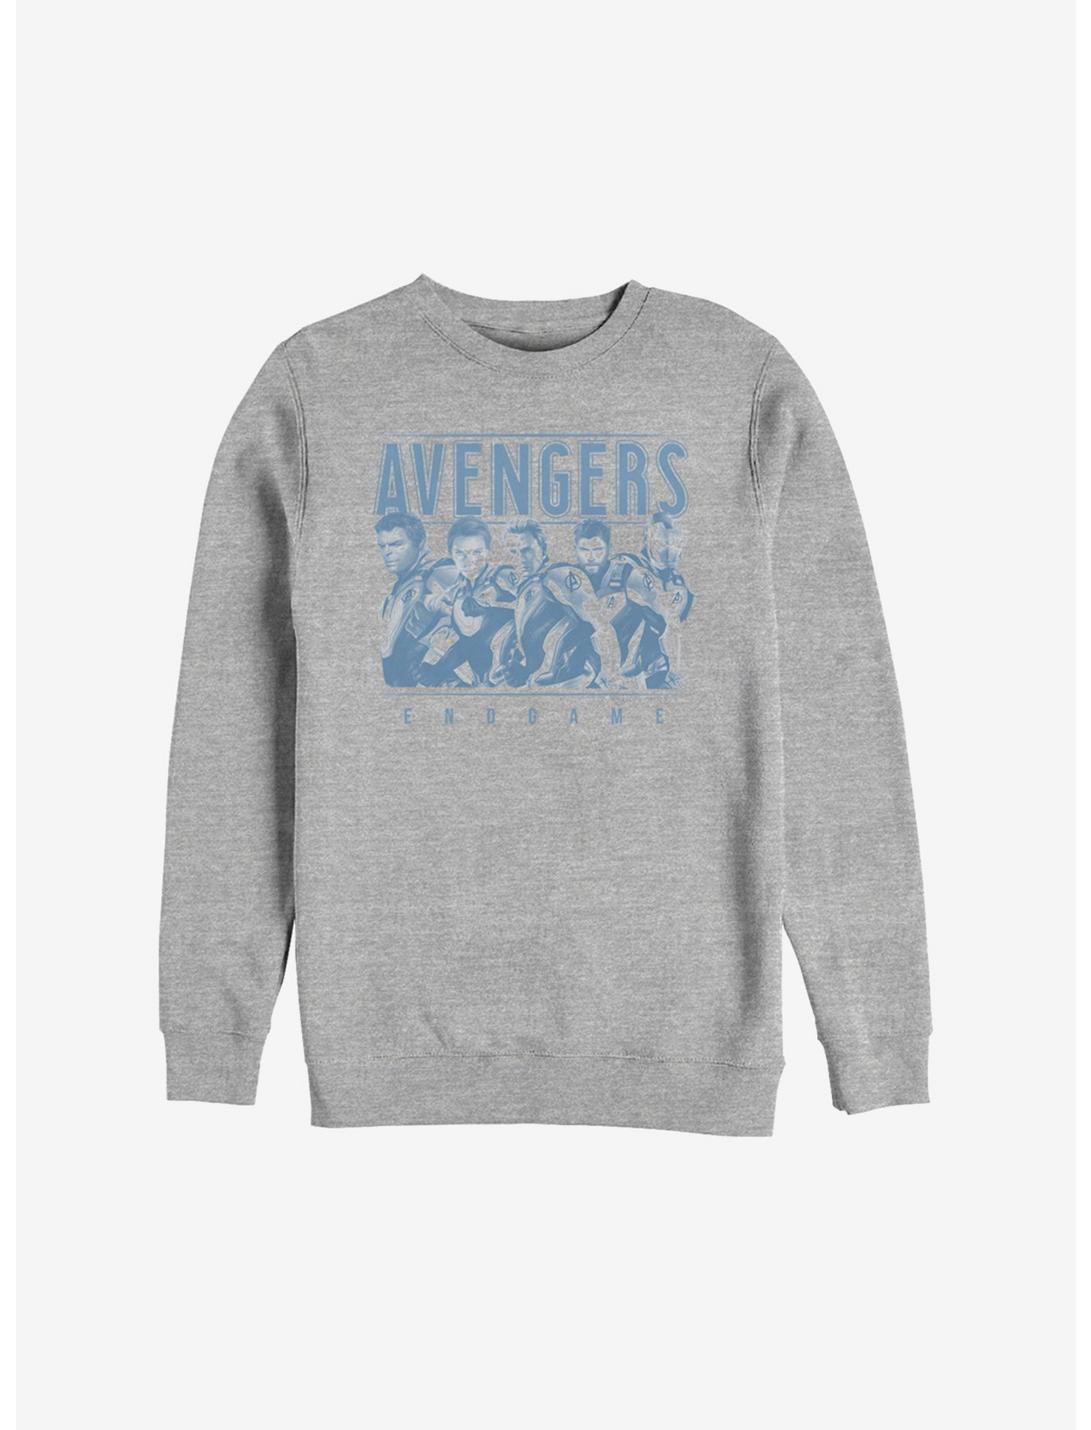 Marvel Avengers: Endgame Our Avengers Sweatshirt, ATH HTR, hi-res